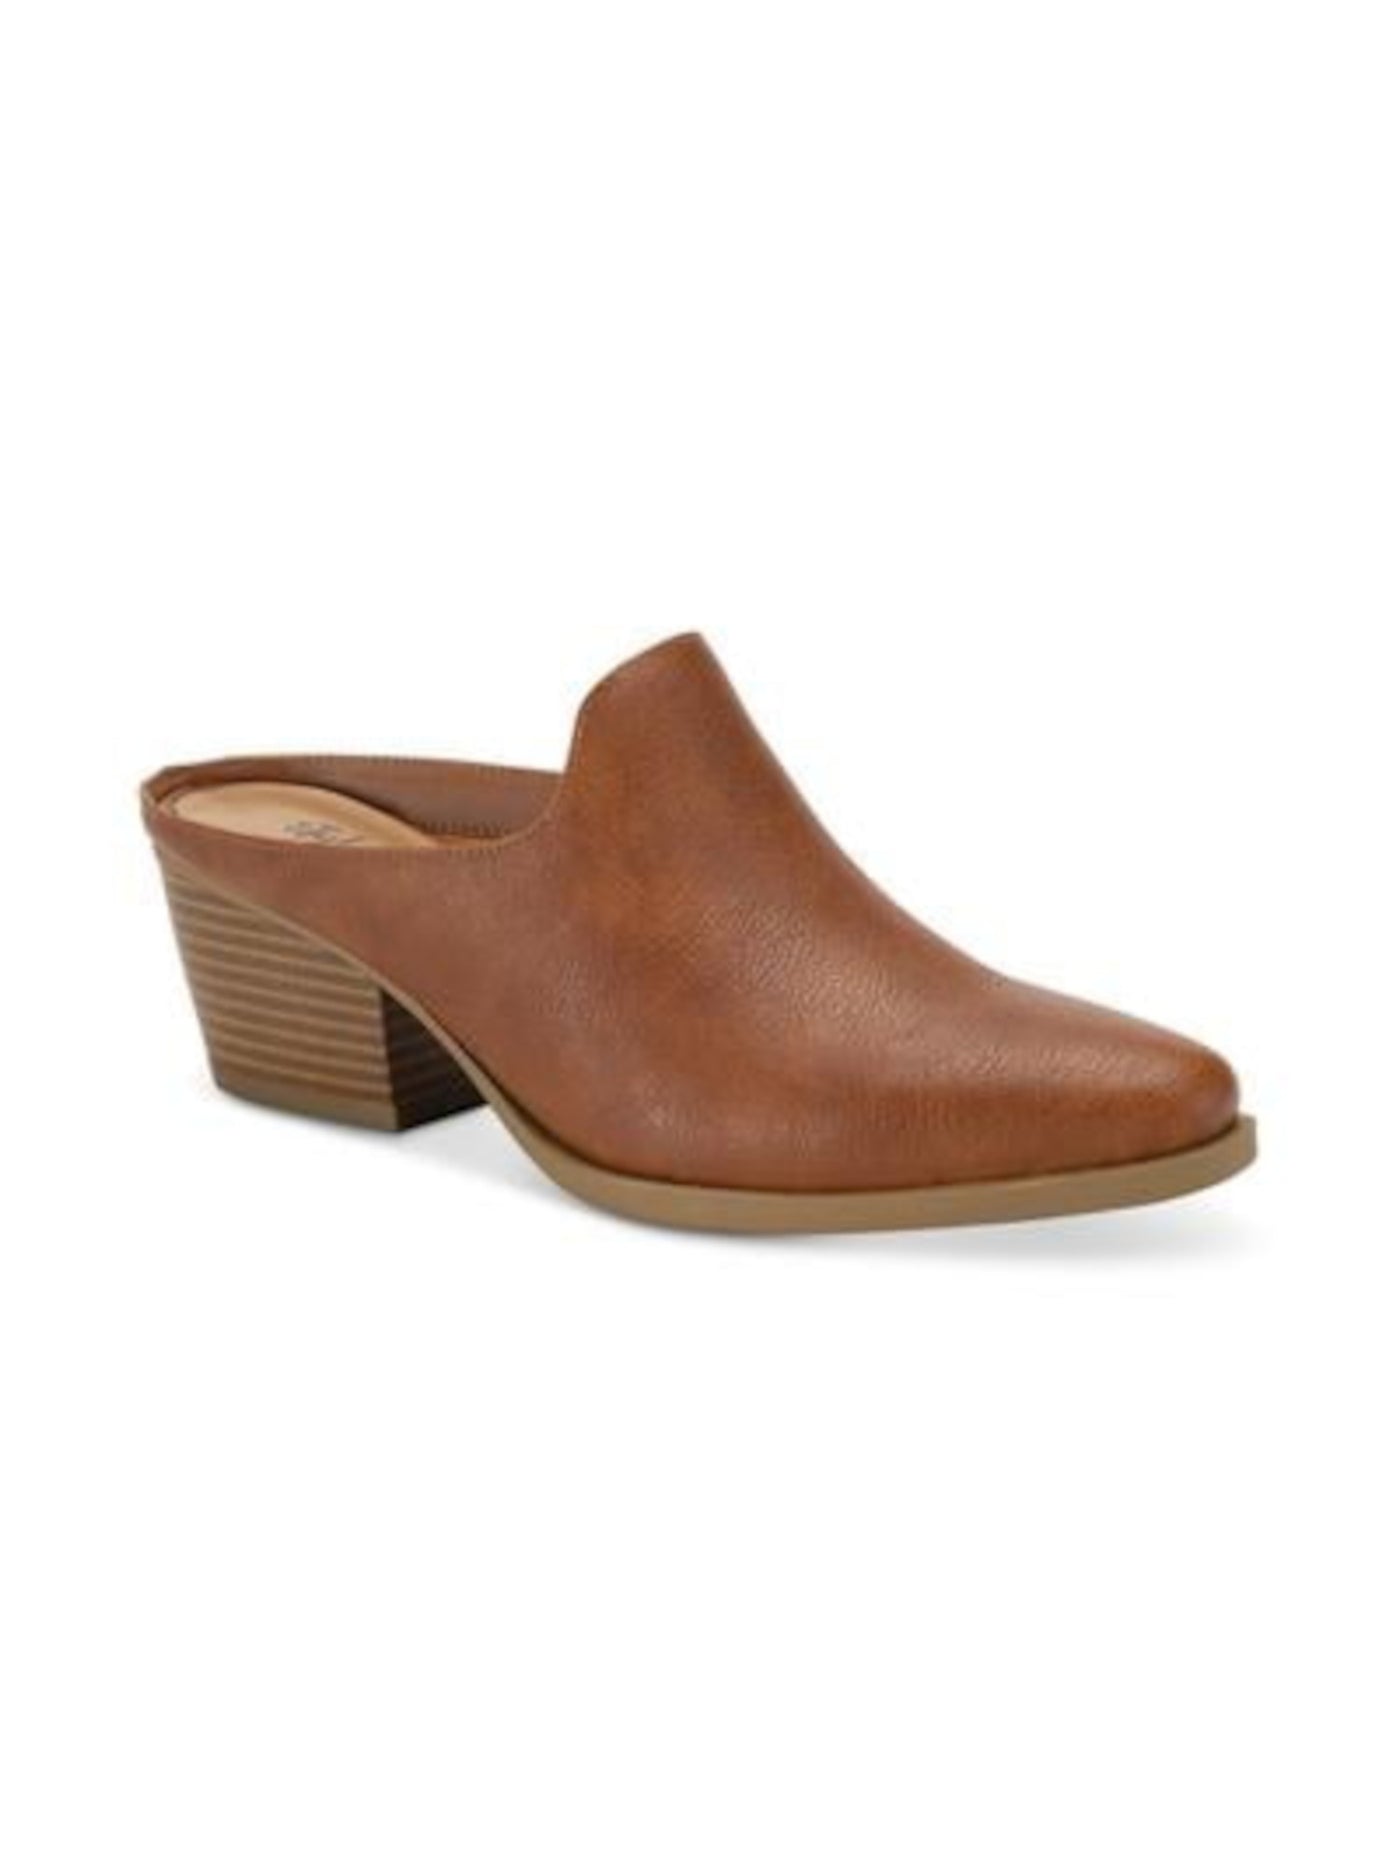 STYLE & COMPANY Womens Brown Padded Rubinn Almond Toe Block Heel Slip On Heeled Mules Shoes 11 M